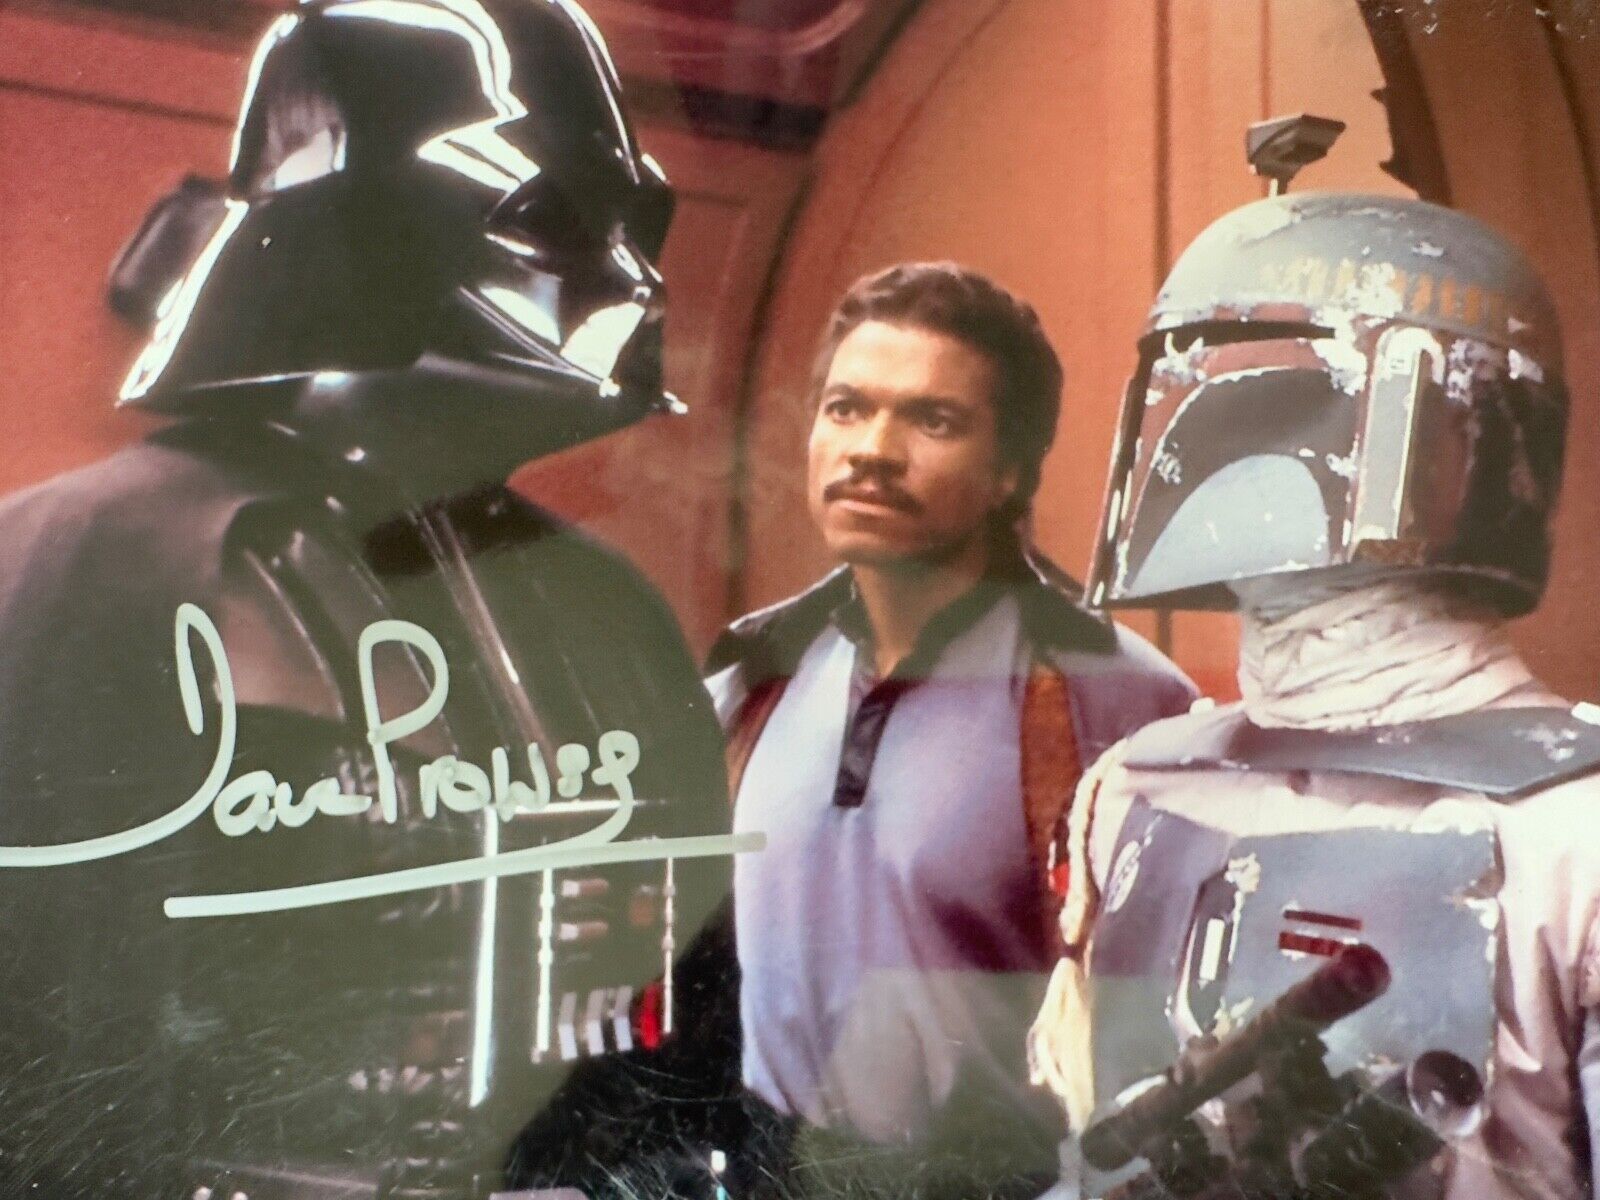 Dave Prowse Signed Star Wars Darth Vader